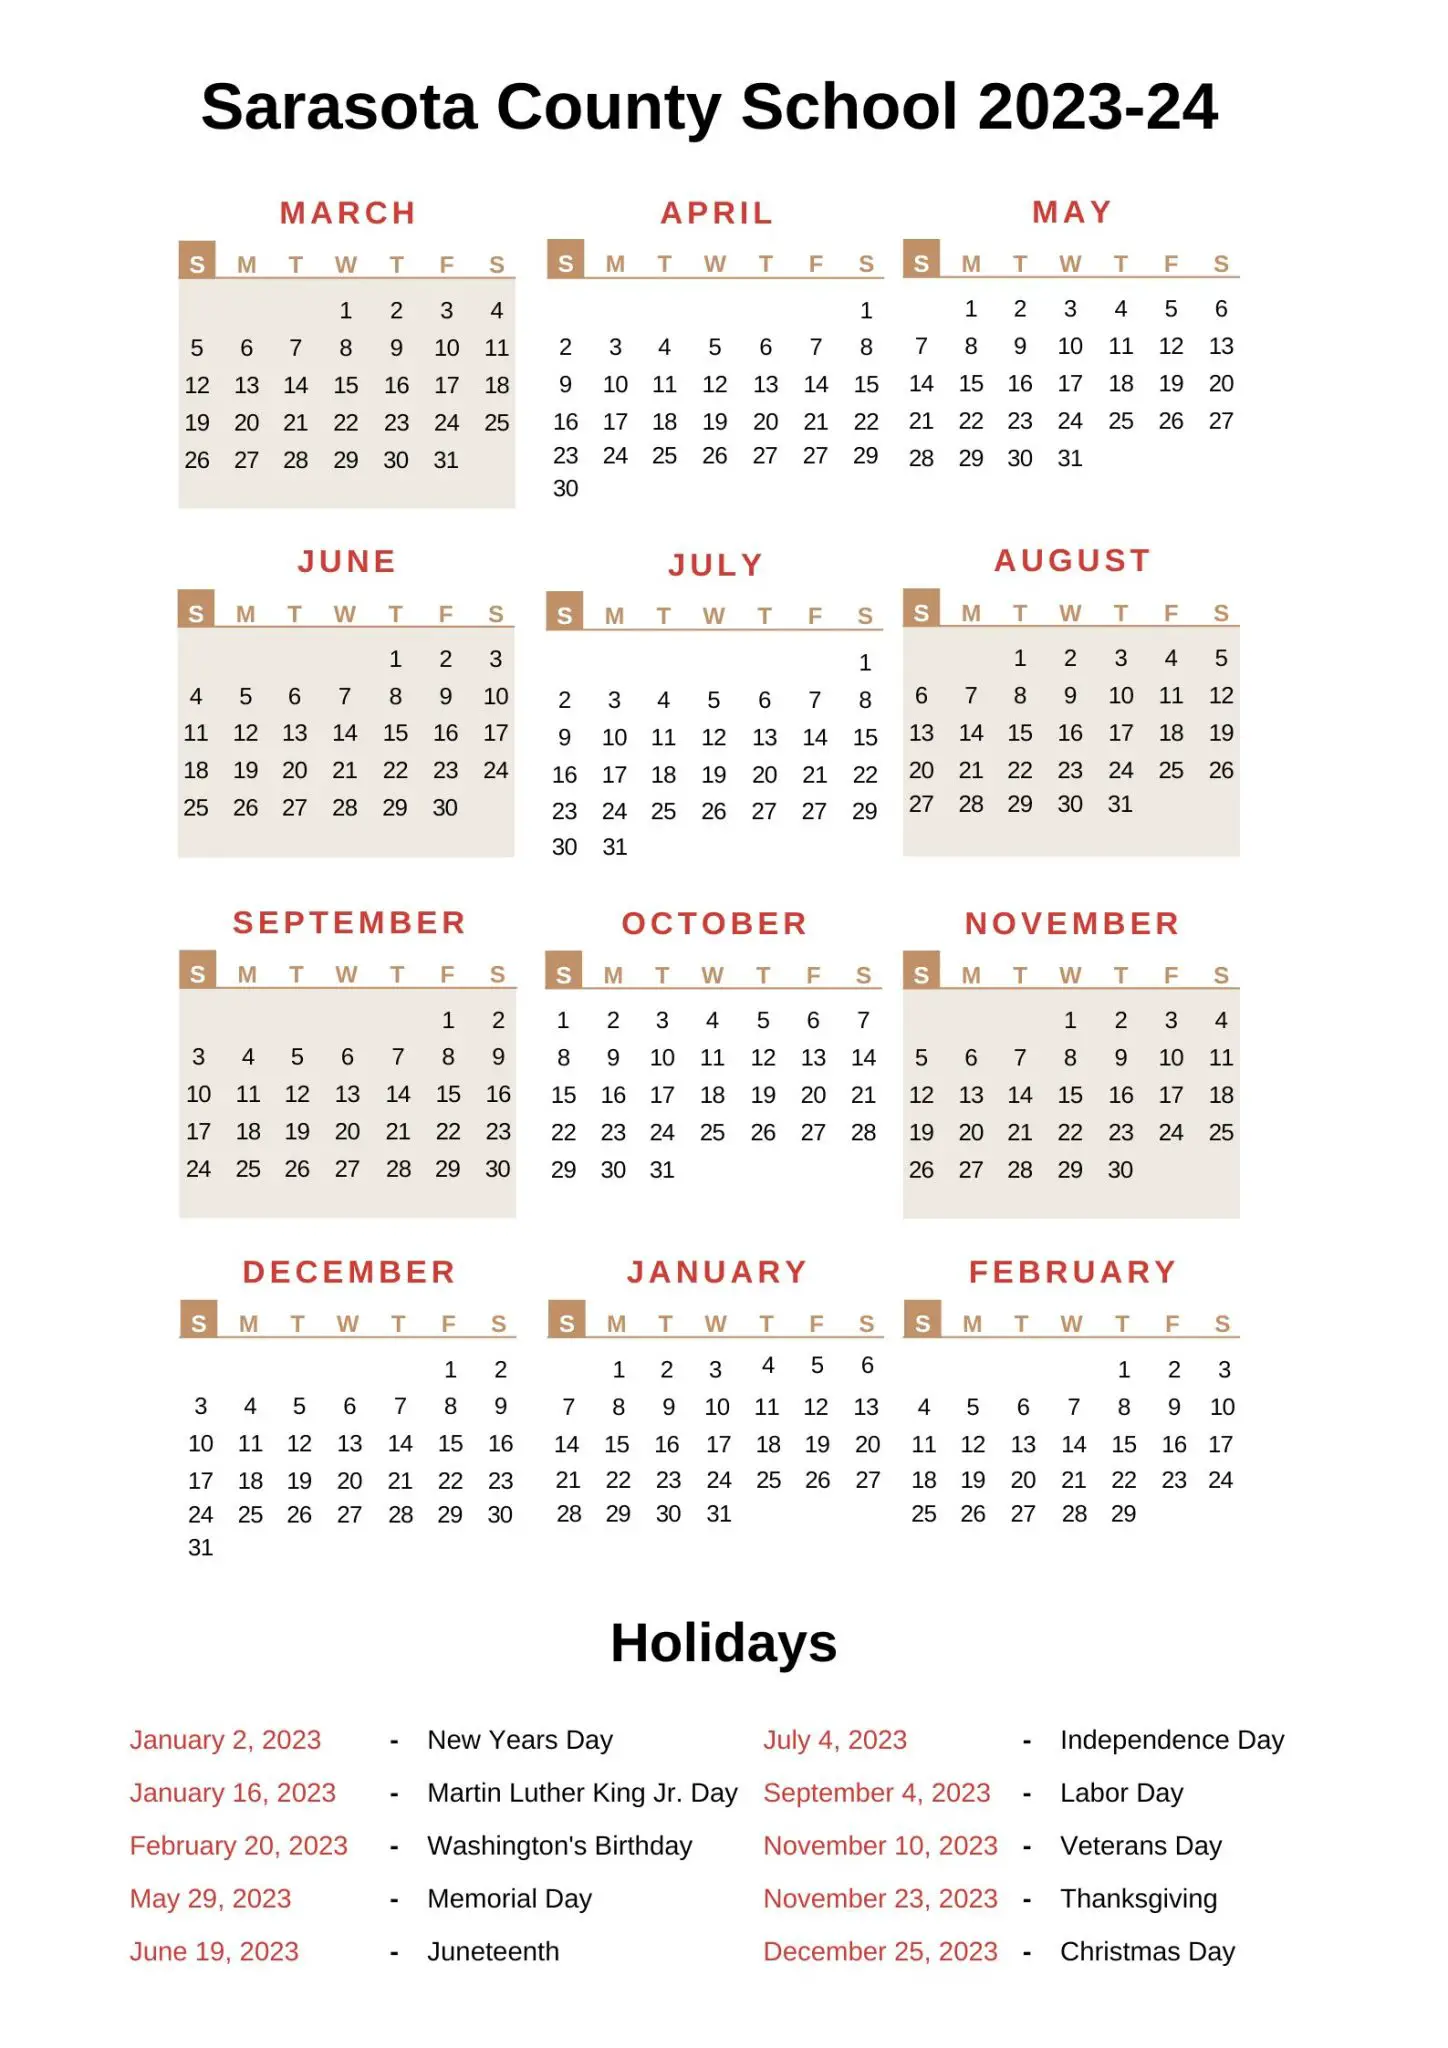 Sarasota County Schools Calendar 2023-24 With Holidays